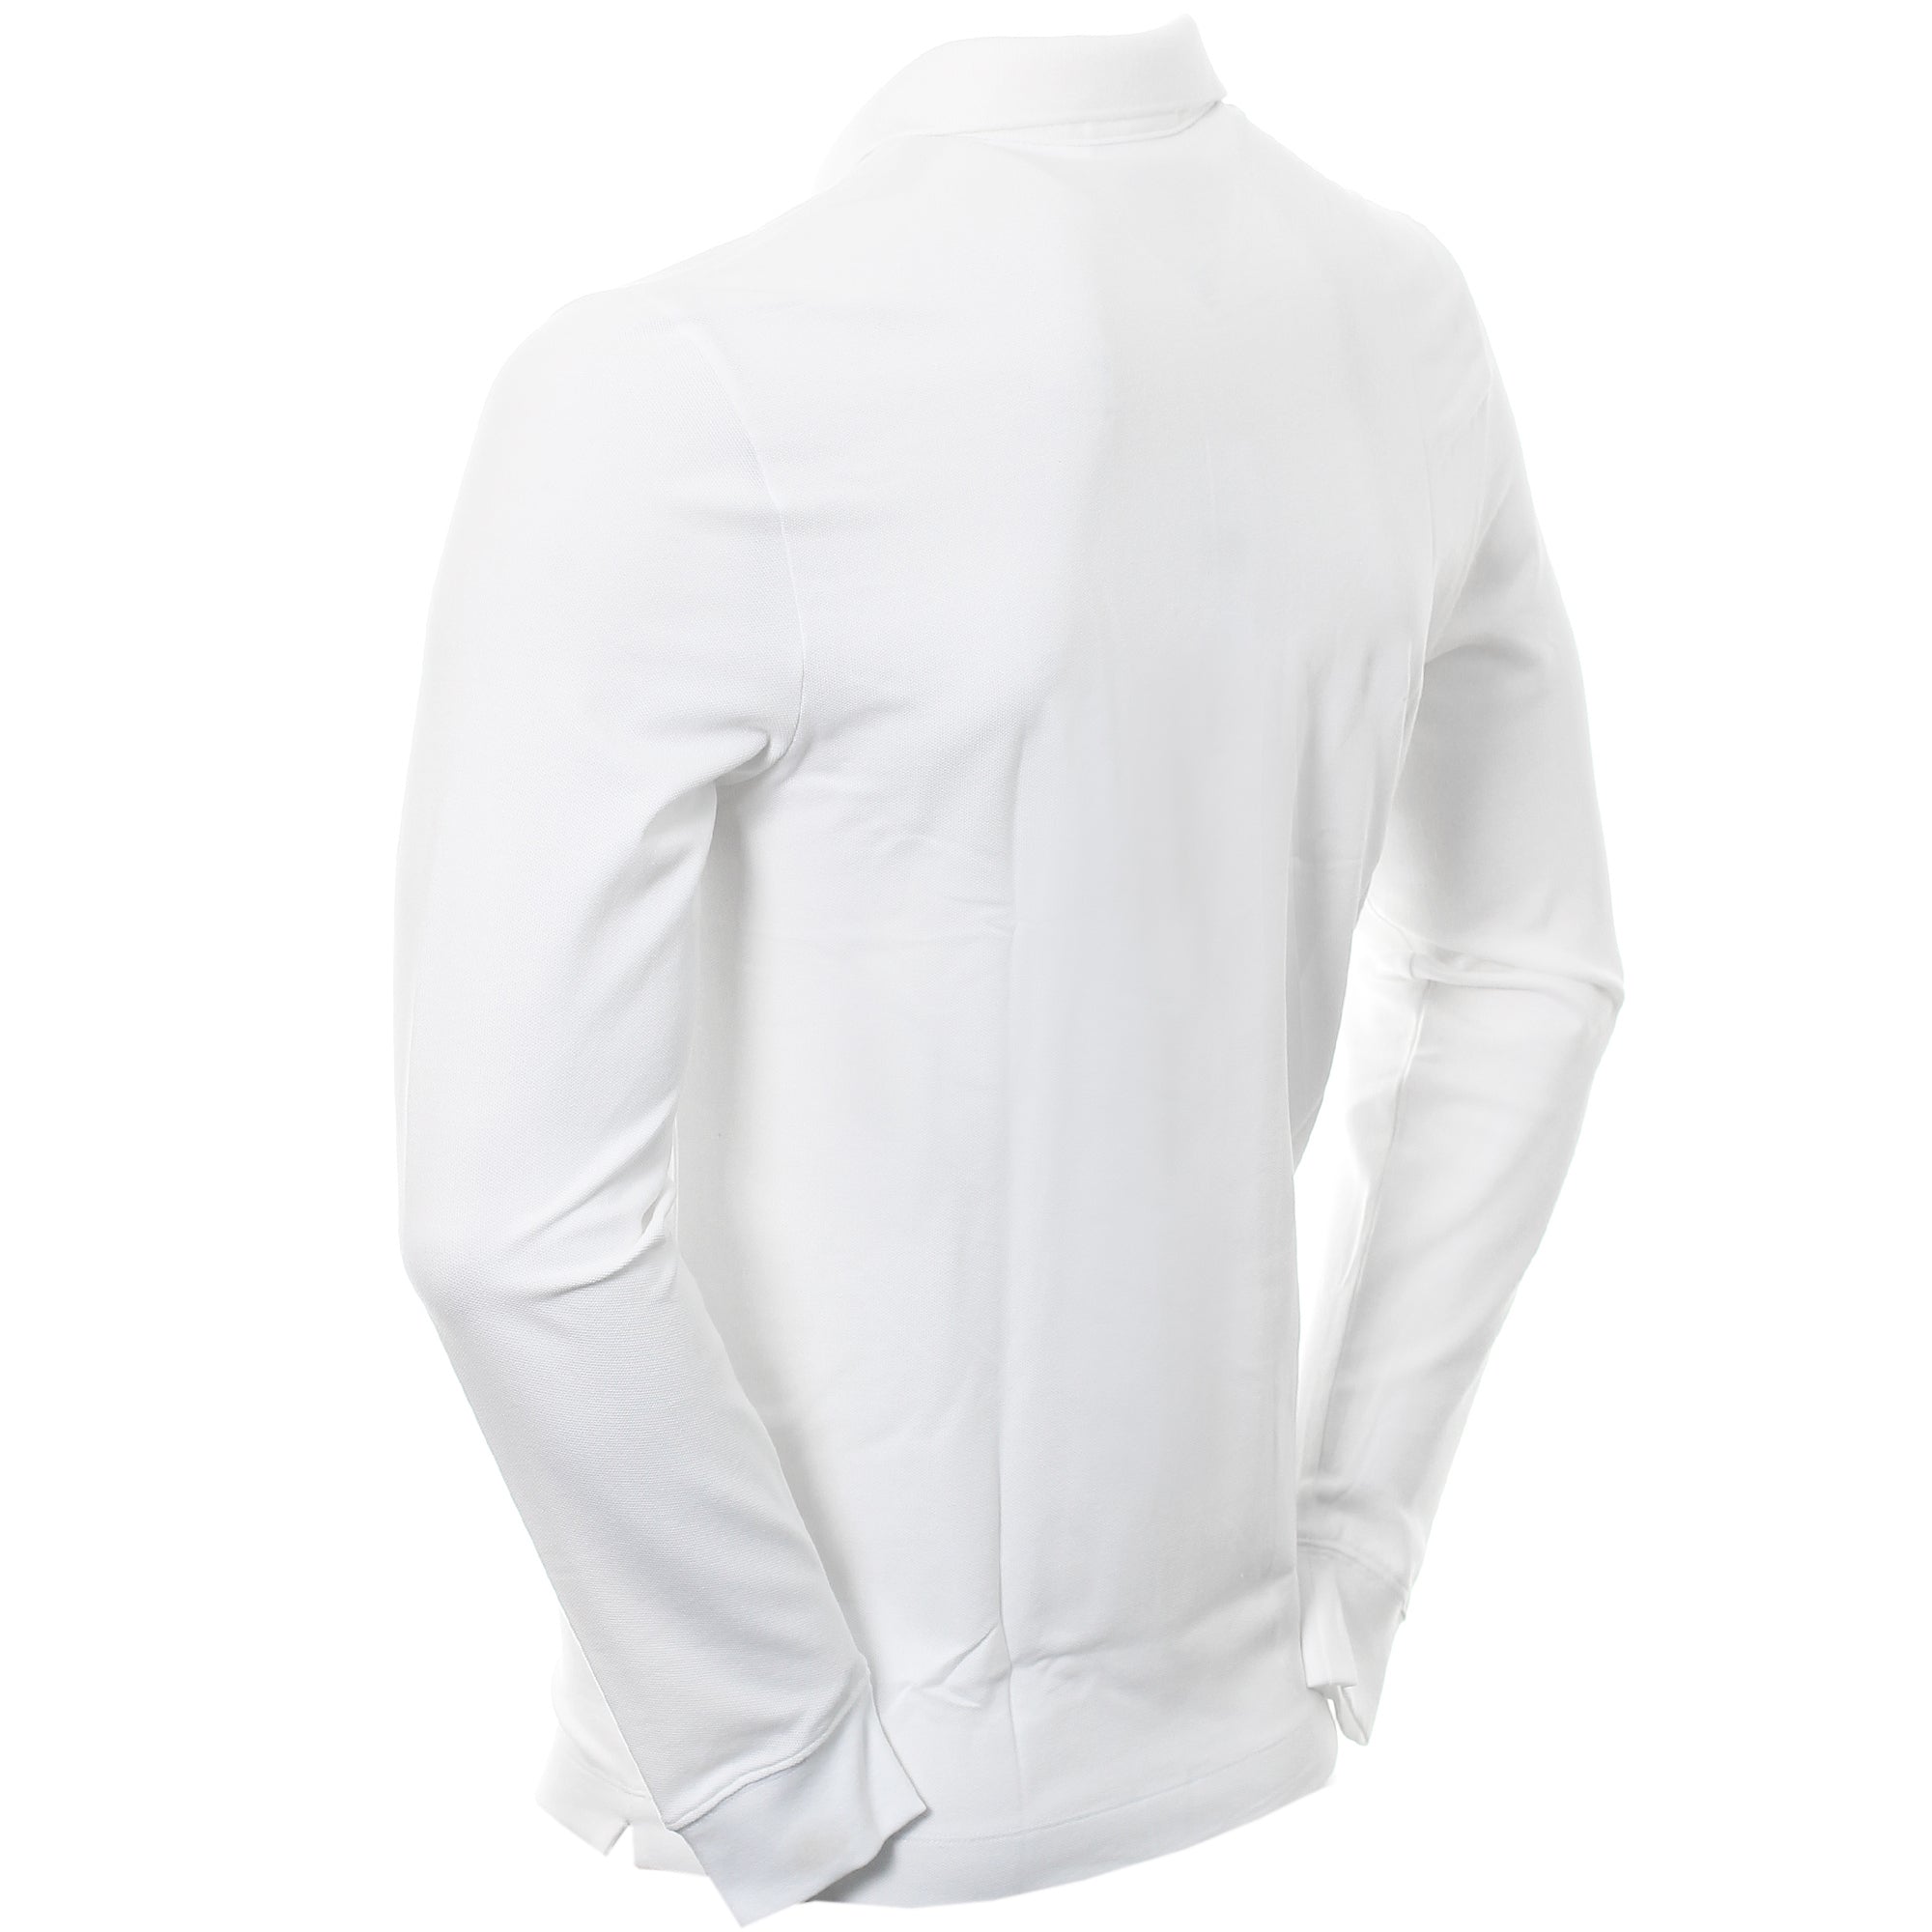 lacoste-paris-long-sleeve-pique-polo-shirt-ph2481-white